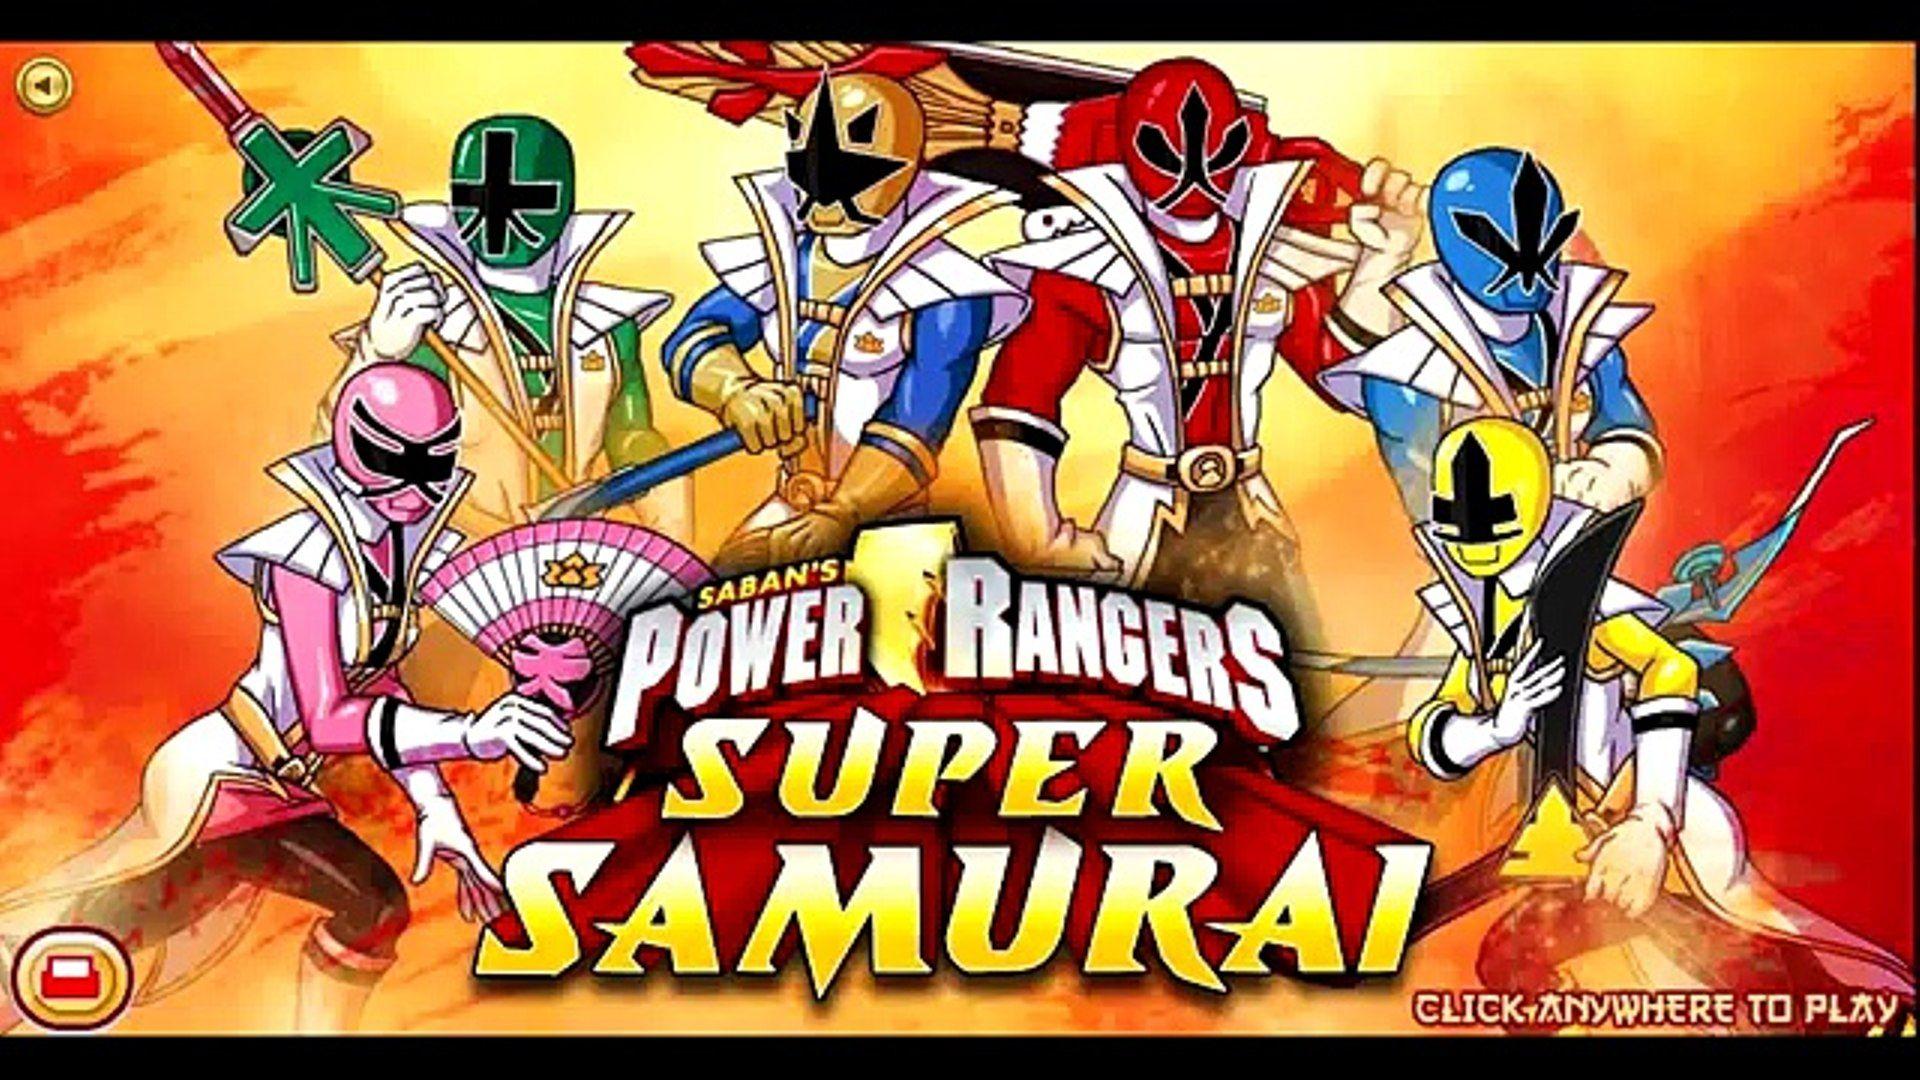 Power Rangers Samurai Super Rangers Super Samurai Game Rangers Super Megaforce!